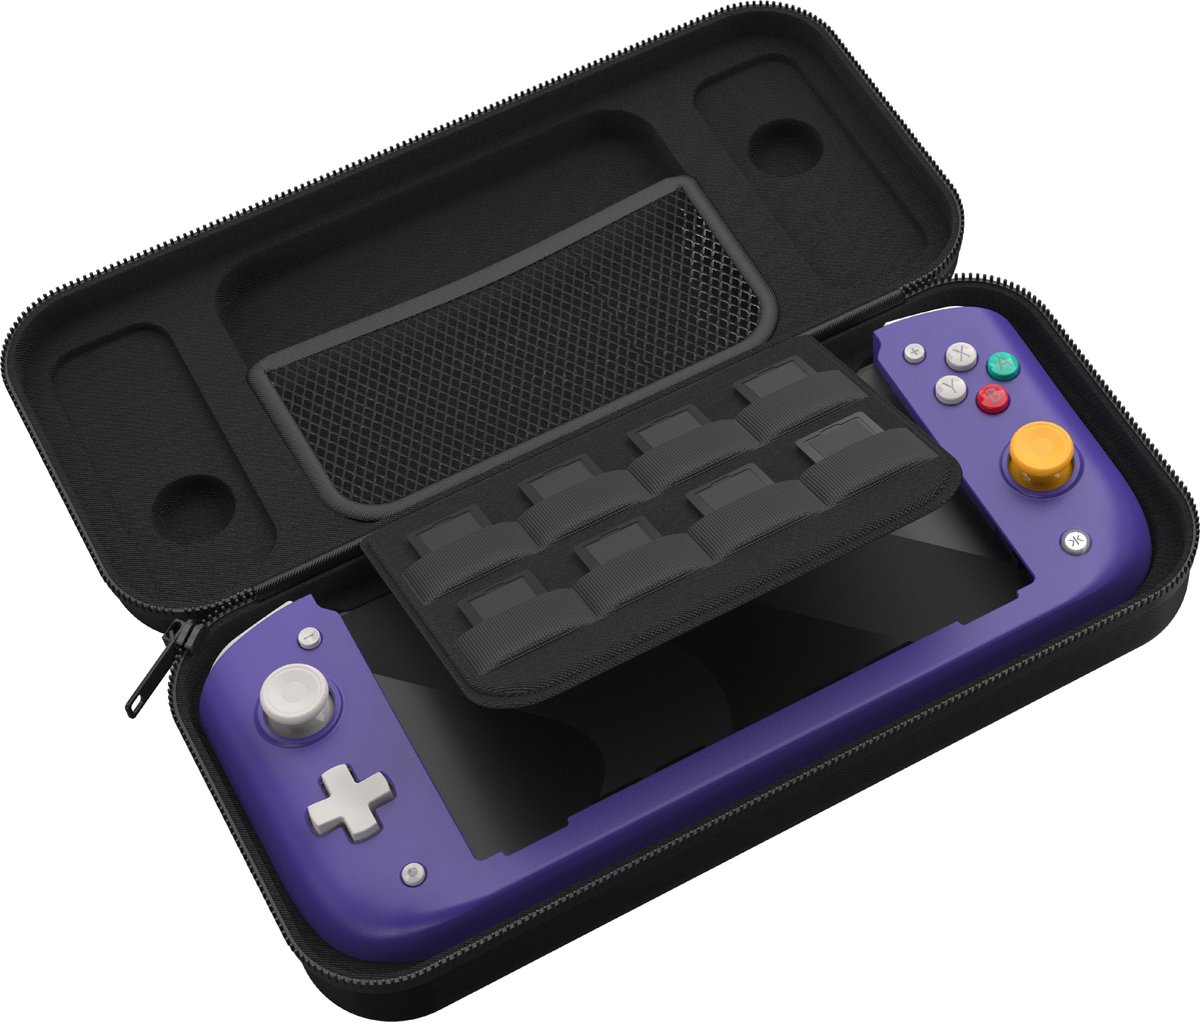 Nitro Deck - Retro Purple Limited Edition - Nintendo Switch Controller